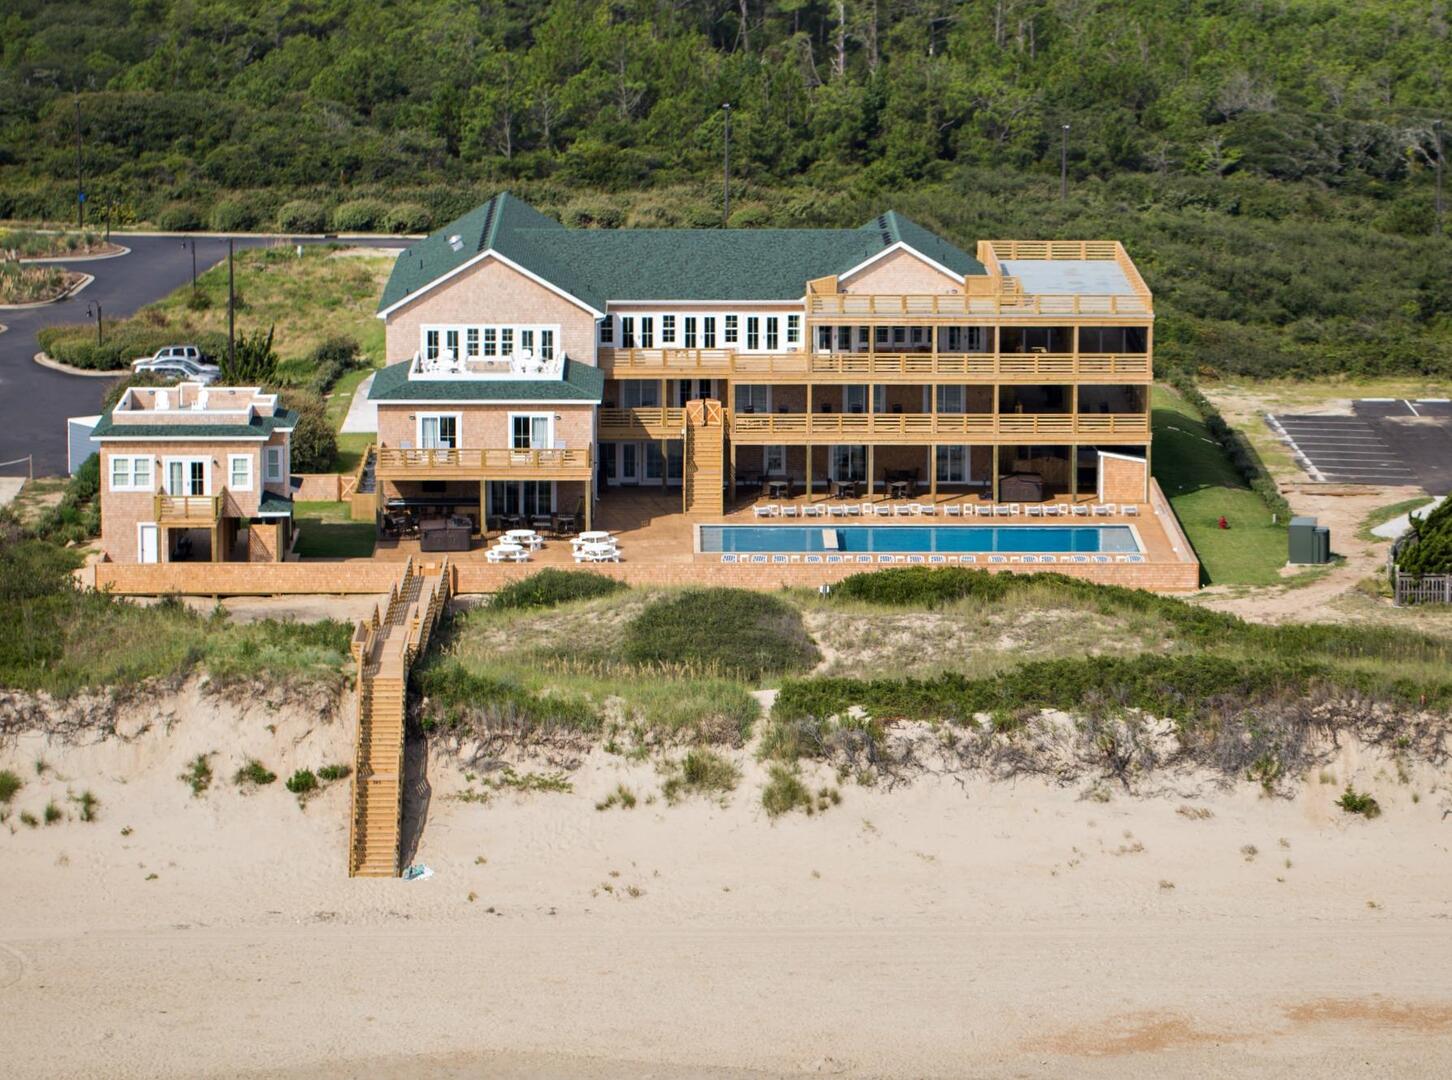 The Pine Island Lodge